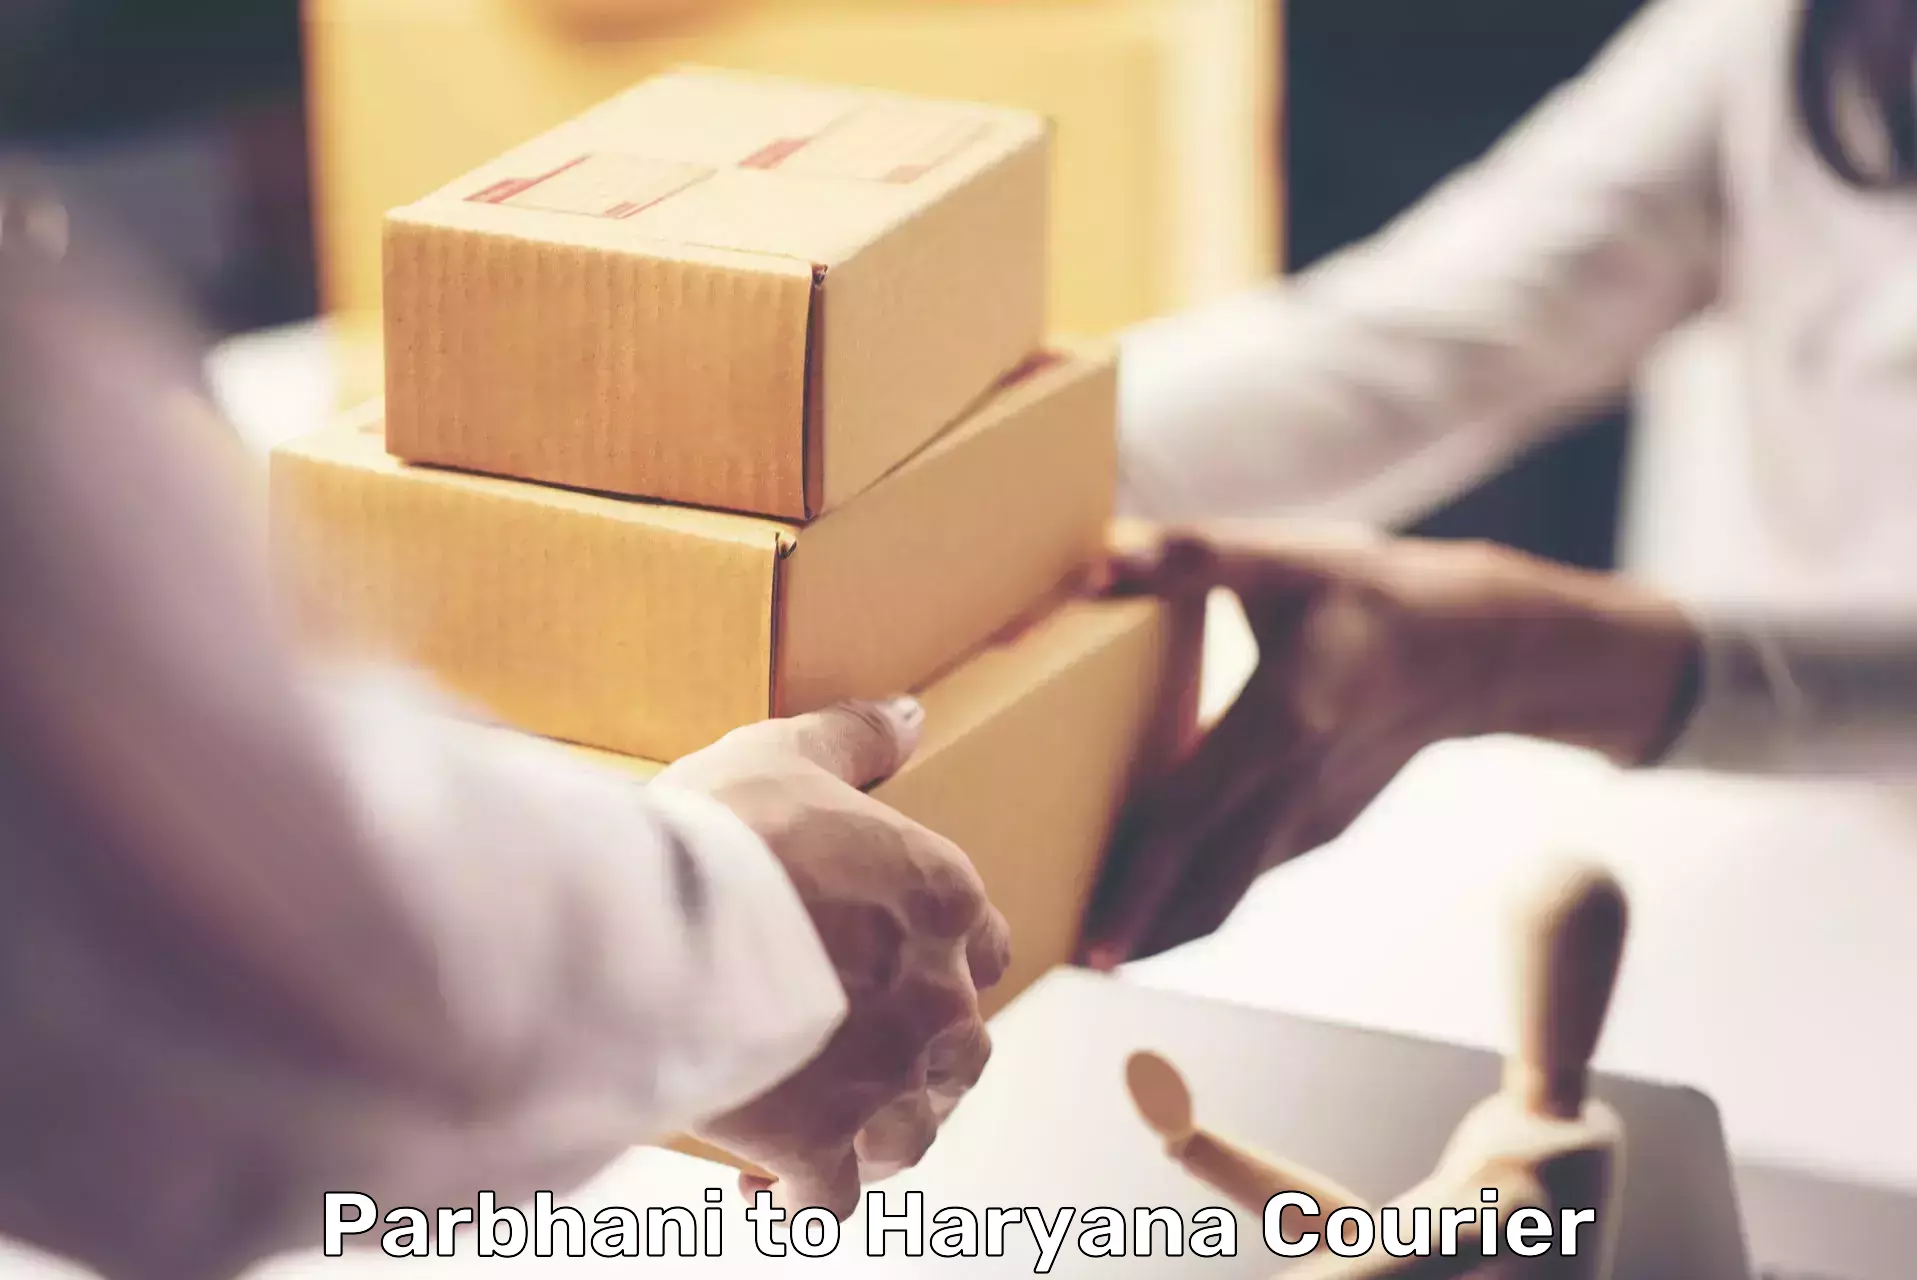 Delivery service partnership Parbhani to Ambala